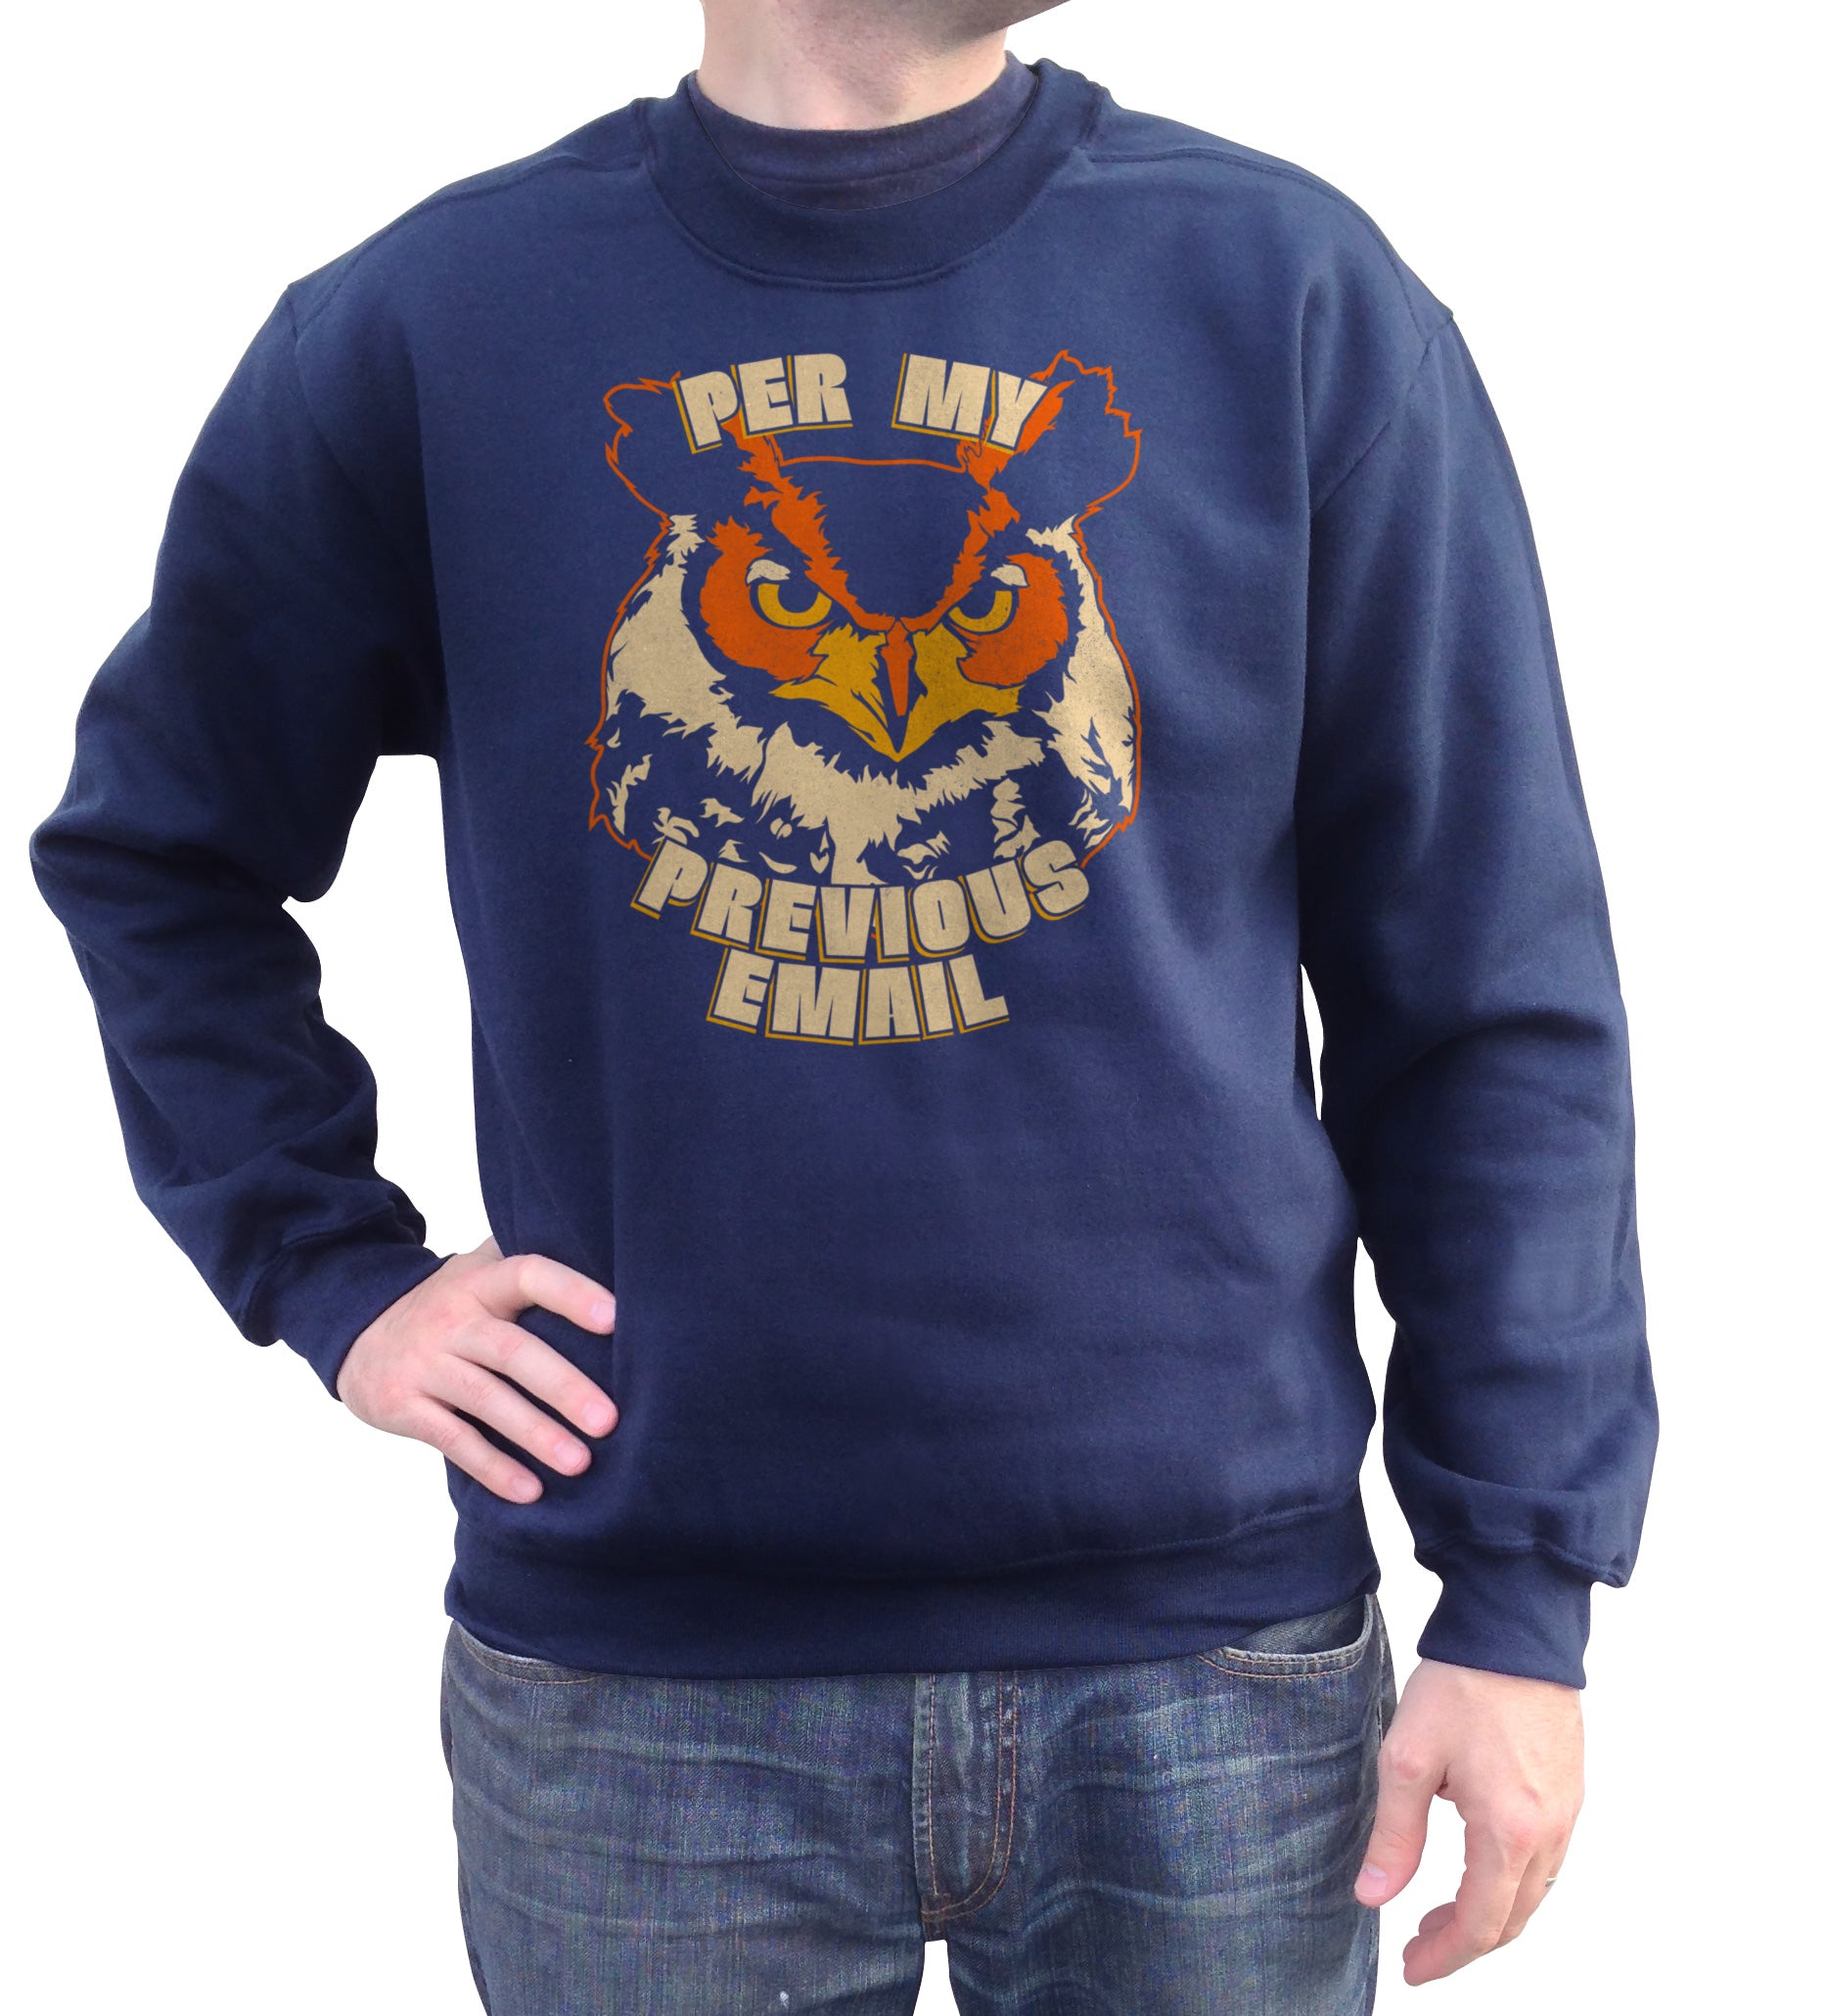 Unisex Per My Previous Email Owl Sweatshirt